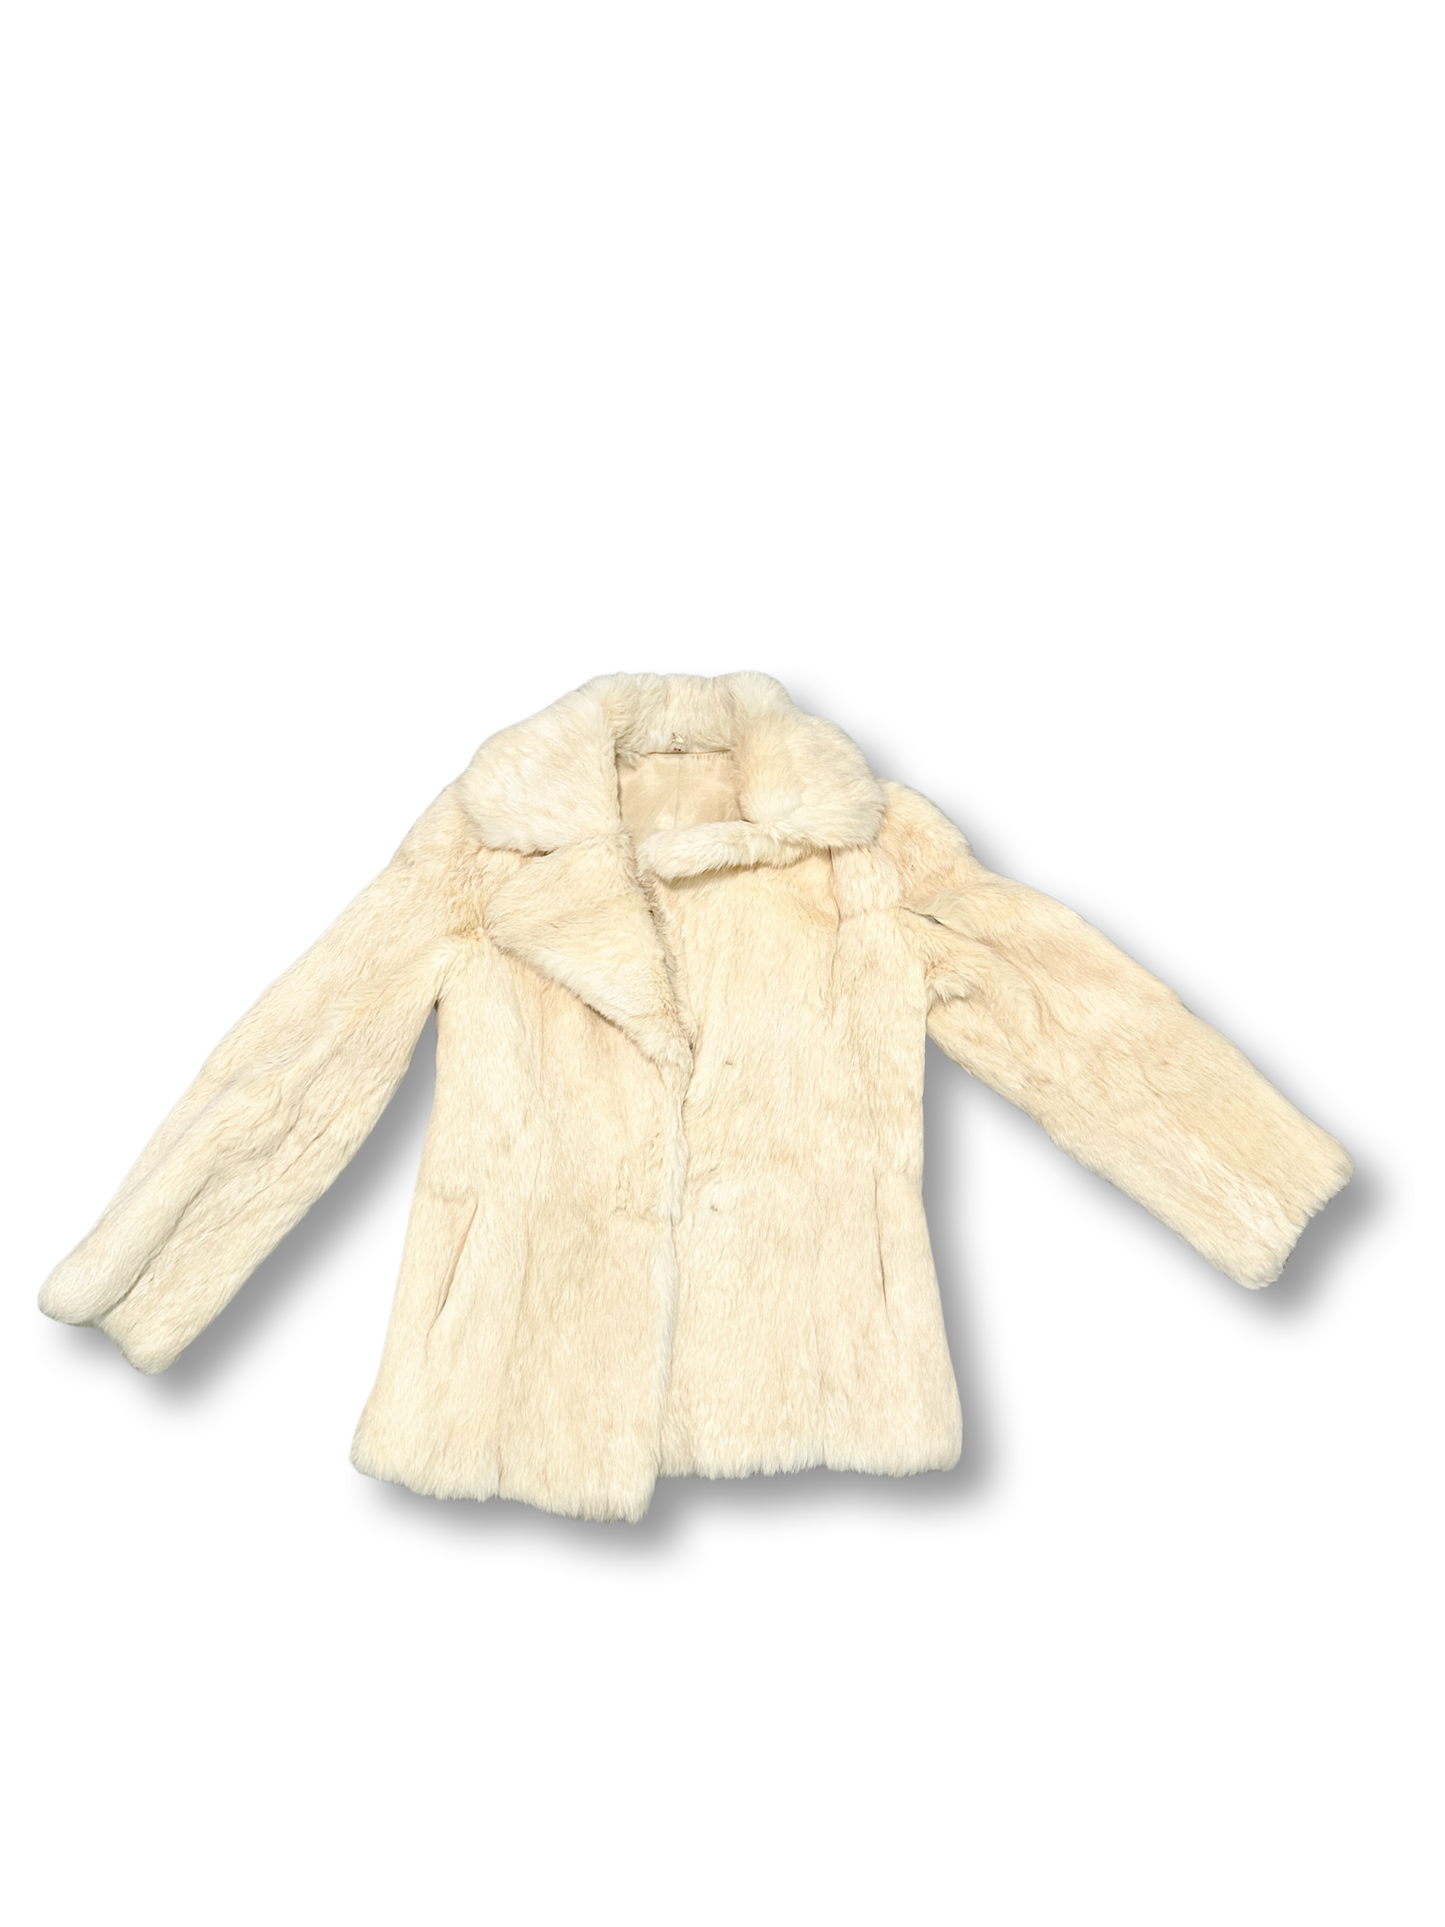 Vintage Cream Fur Coat | Size: XS | Fully Lined Fur Coat